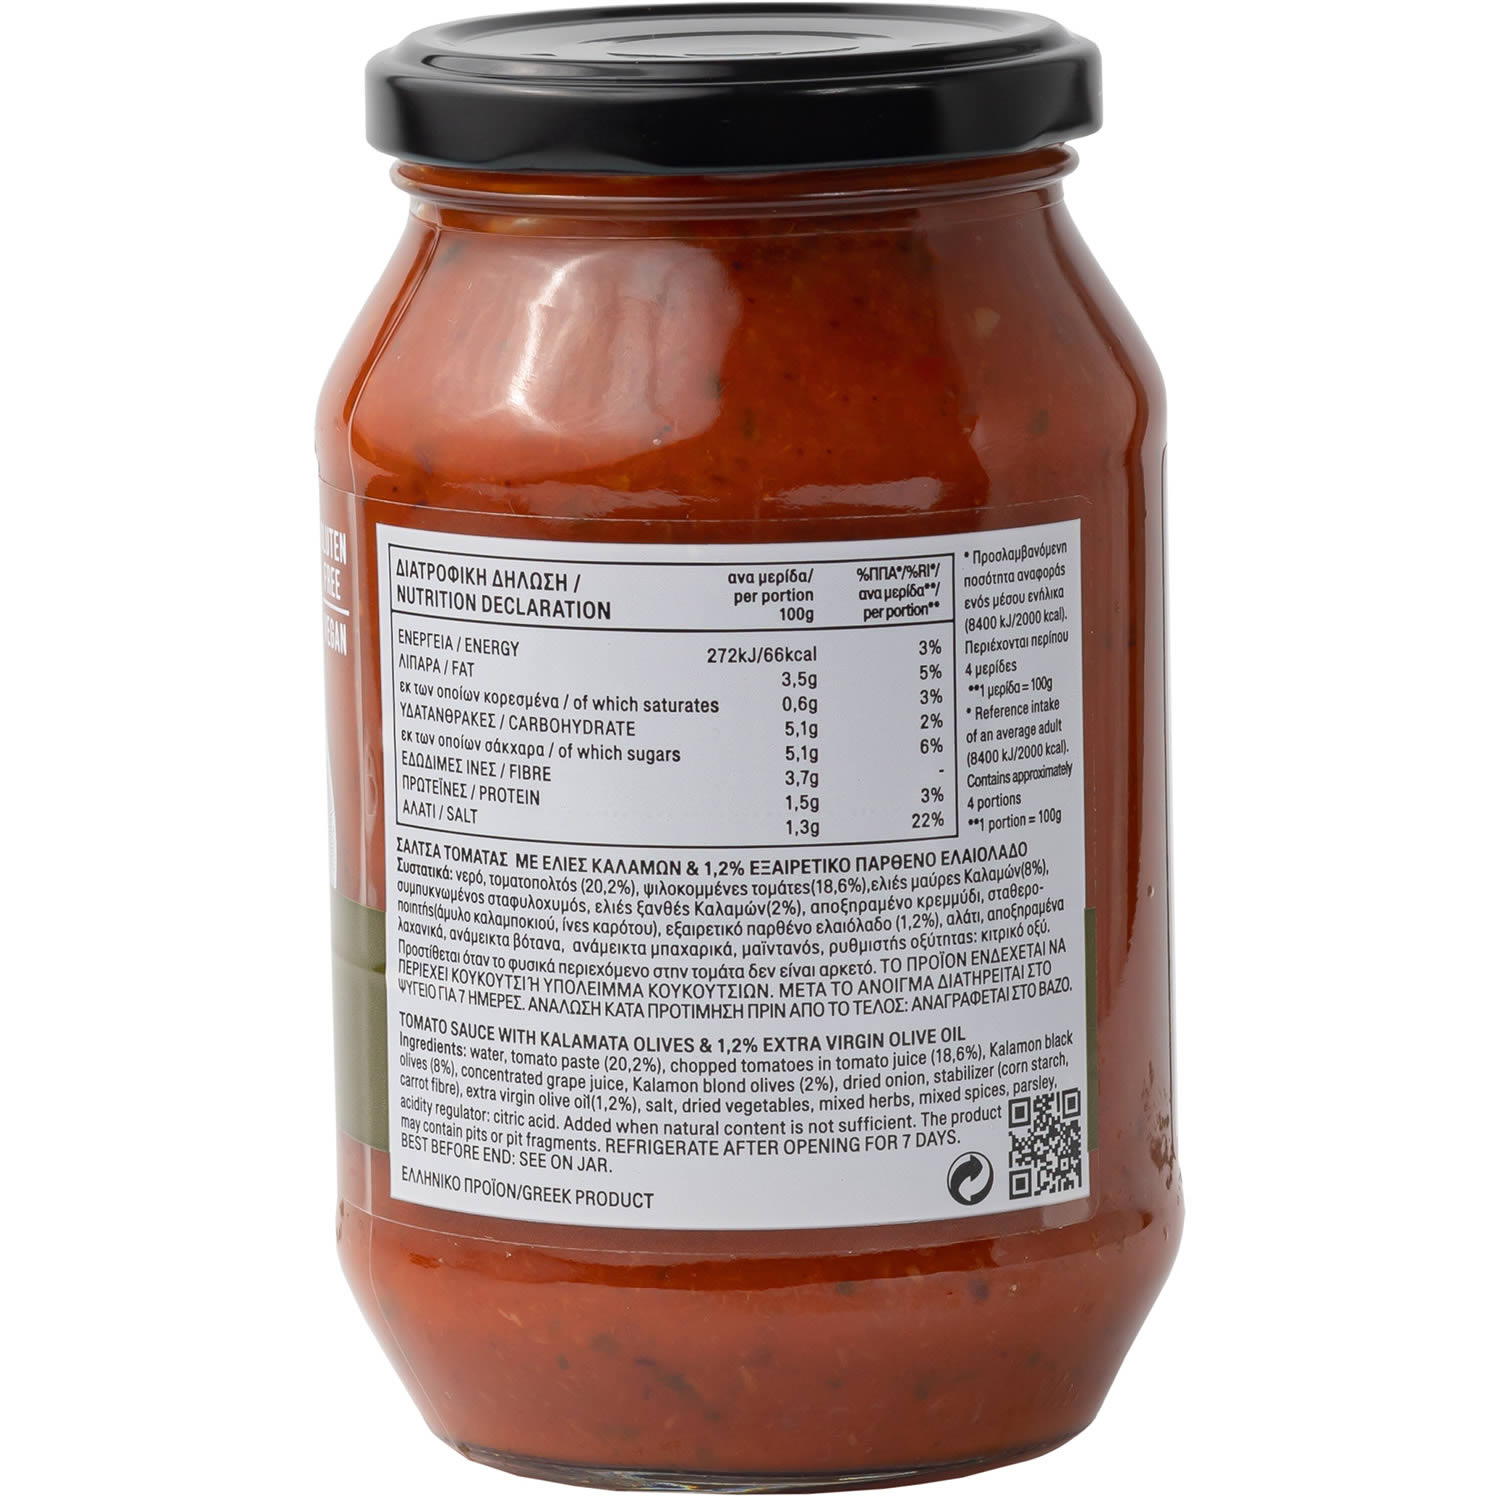 Kyknos - Tomatensoße mit Kalamata Oliven 425 g